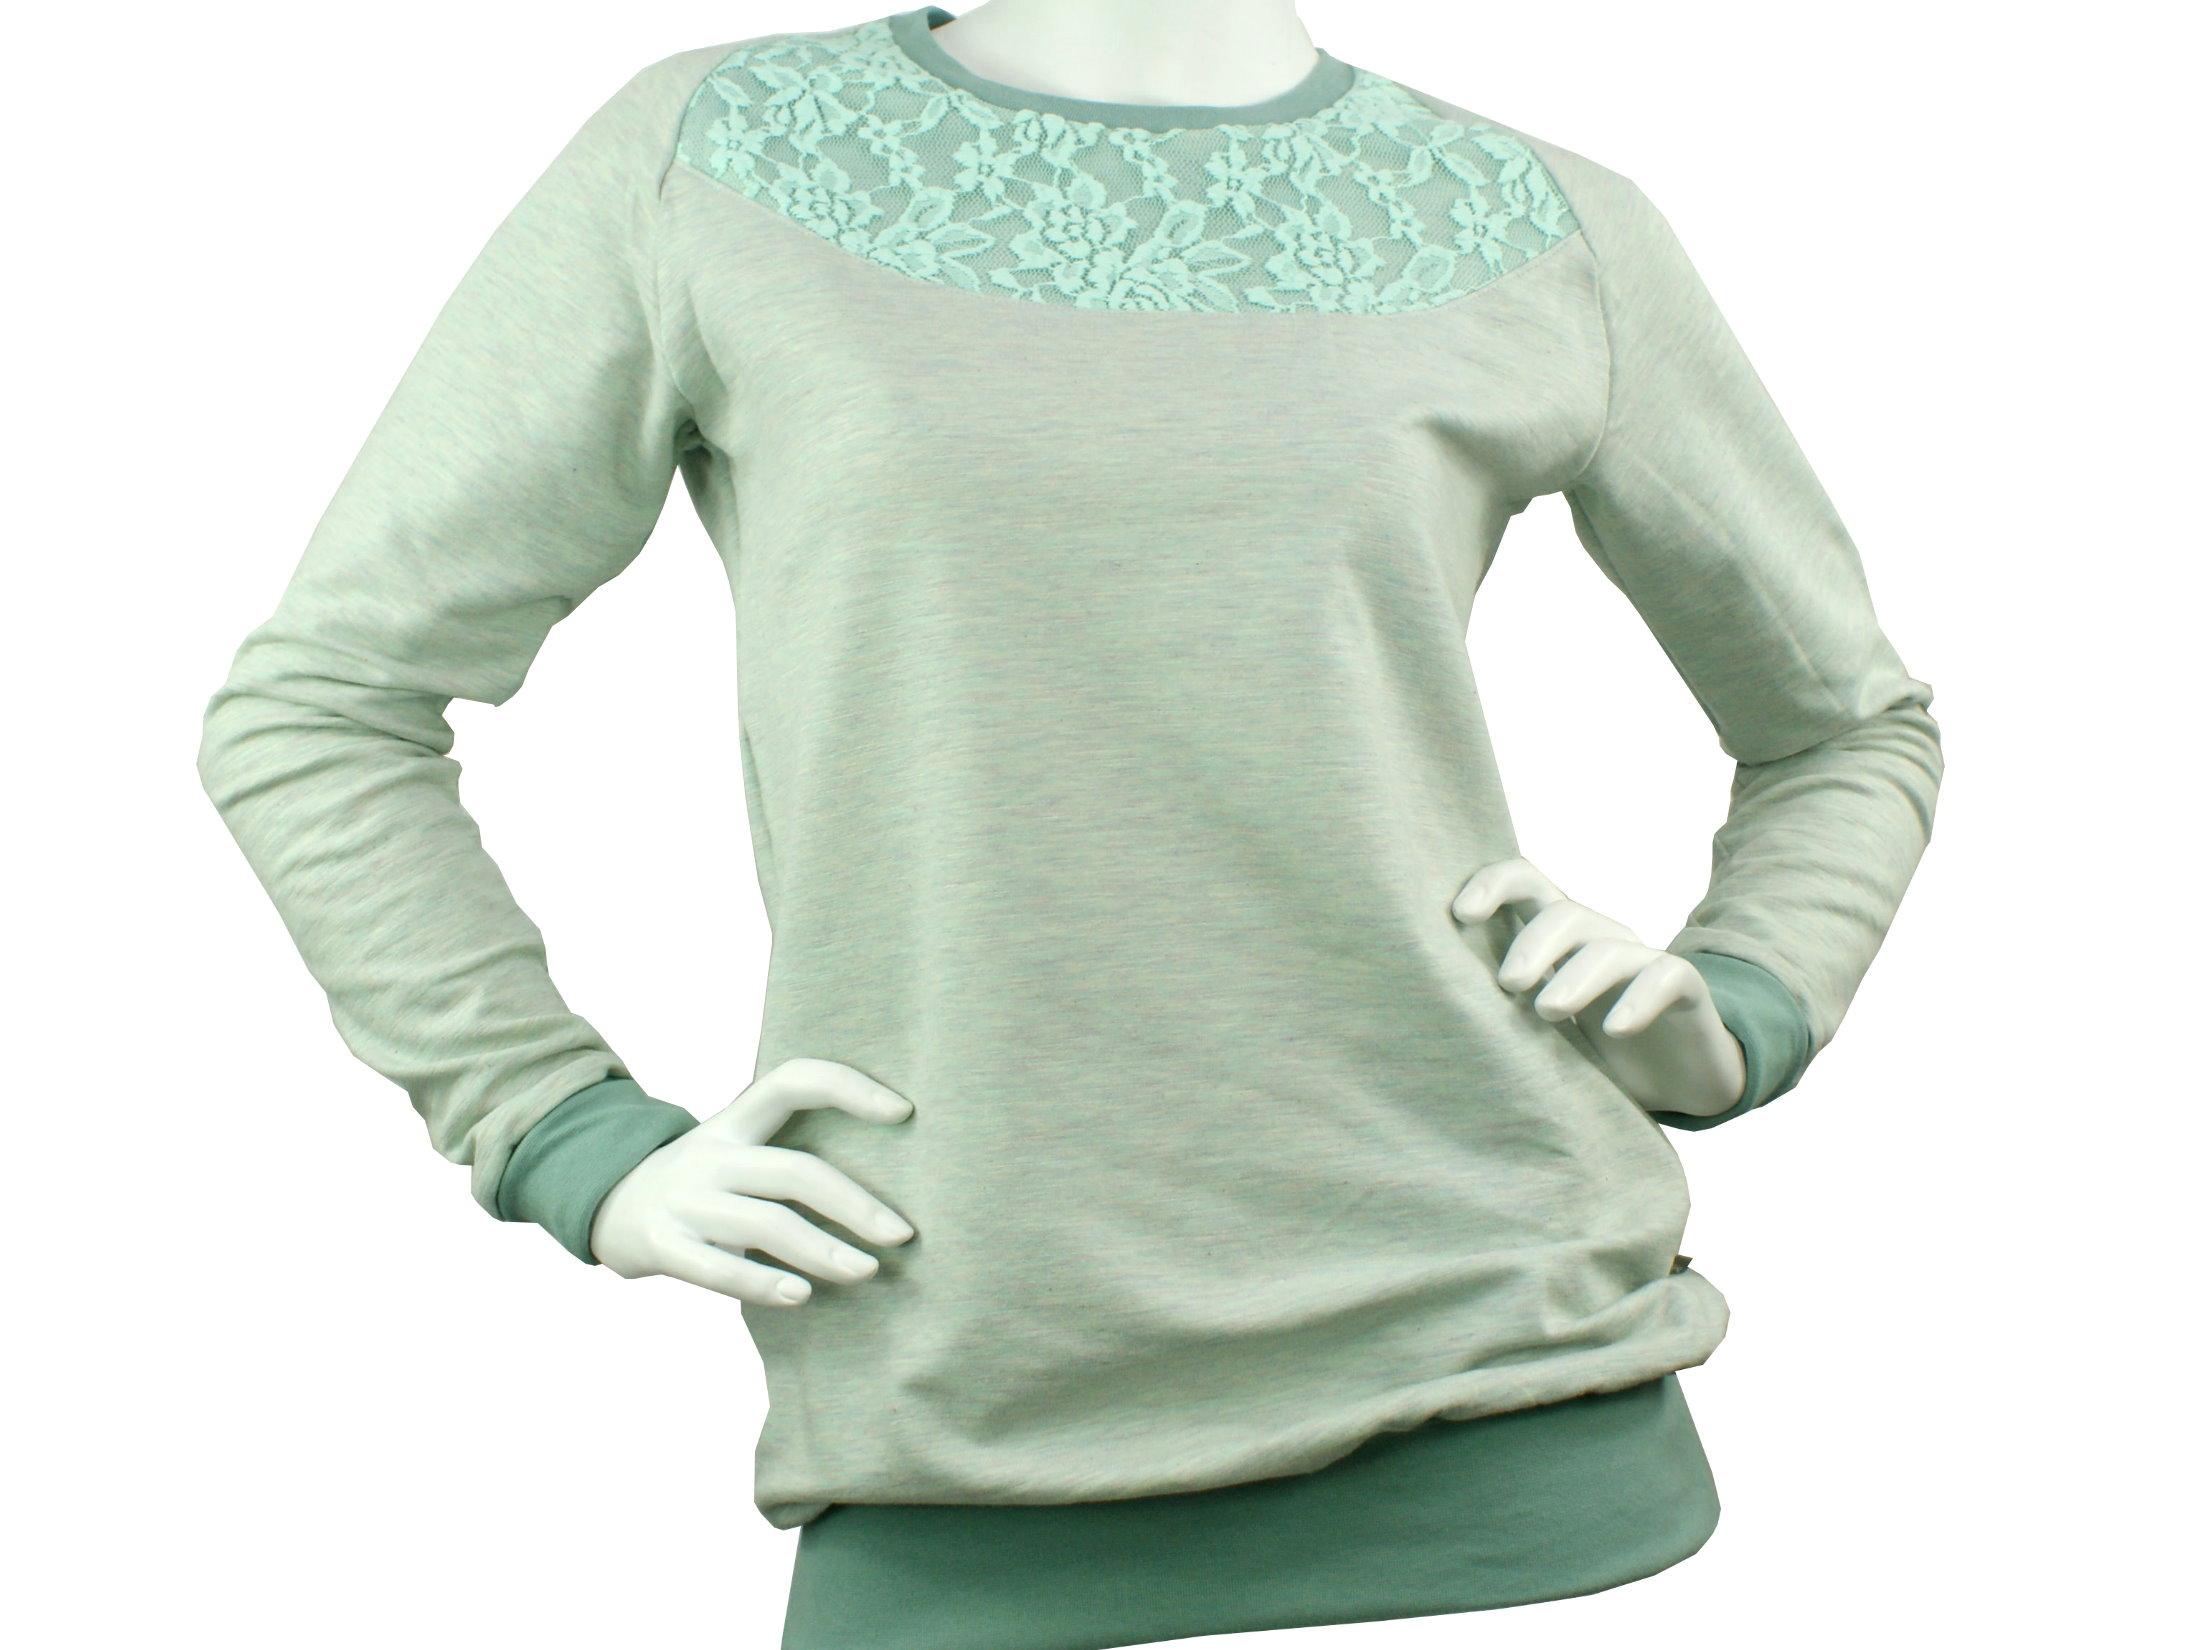 Damen Sweatshirt Pullover "Lace" mint-meliert mit Spitze